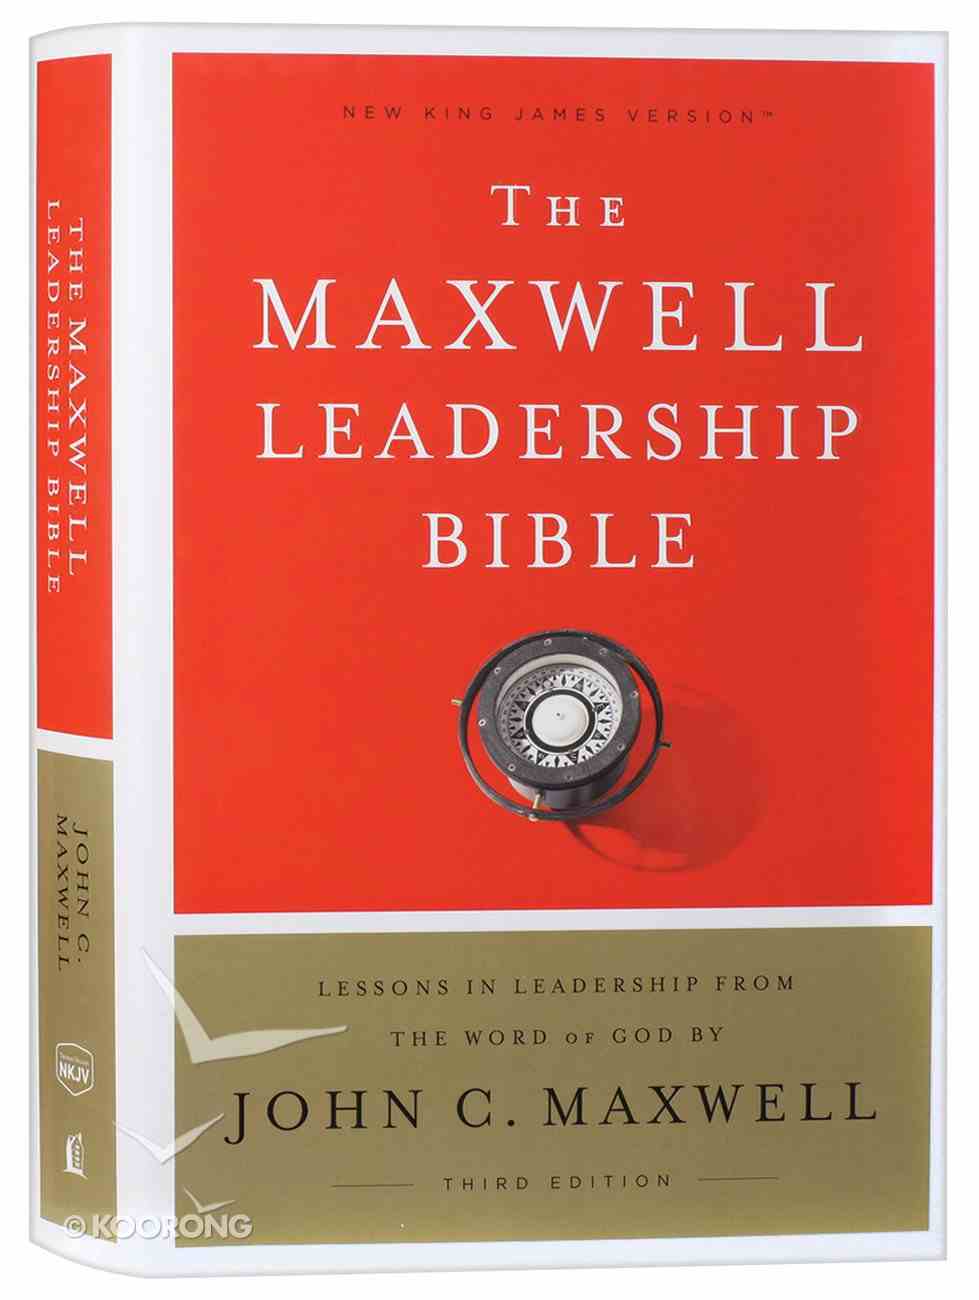 NKJV Maxwell Leadership Bible (Third Edition) Hardback